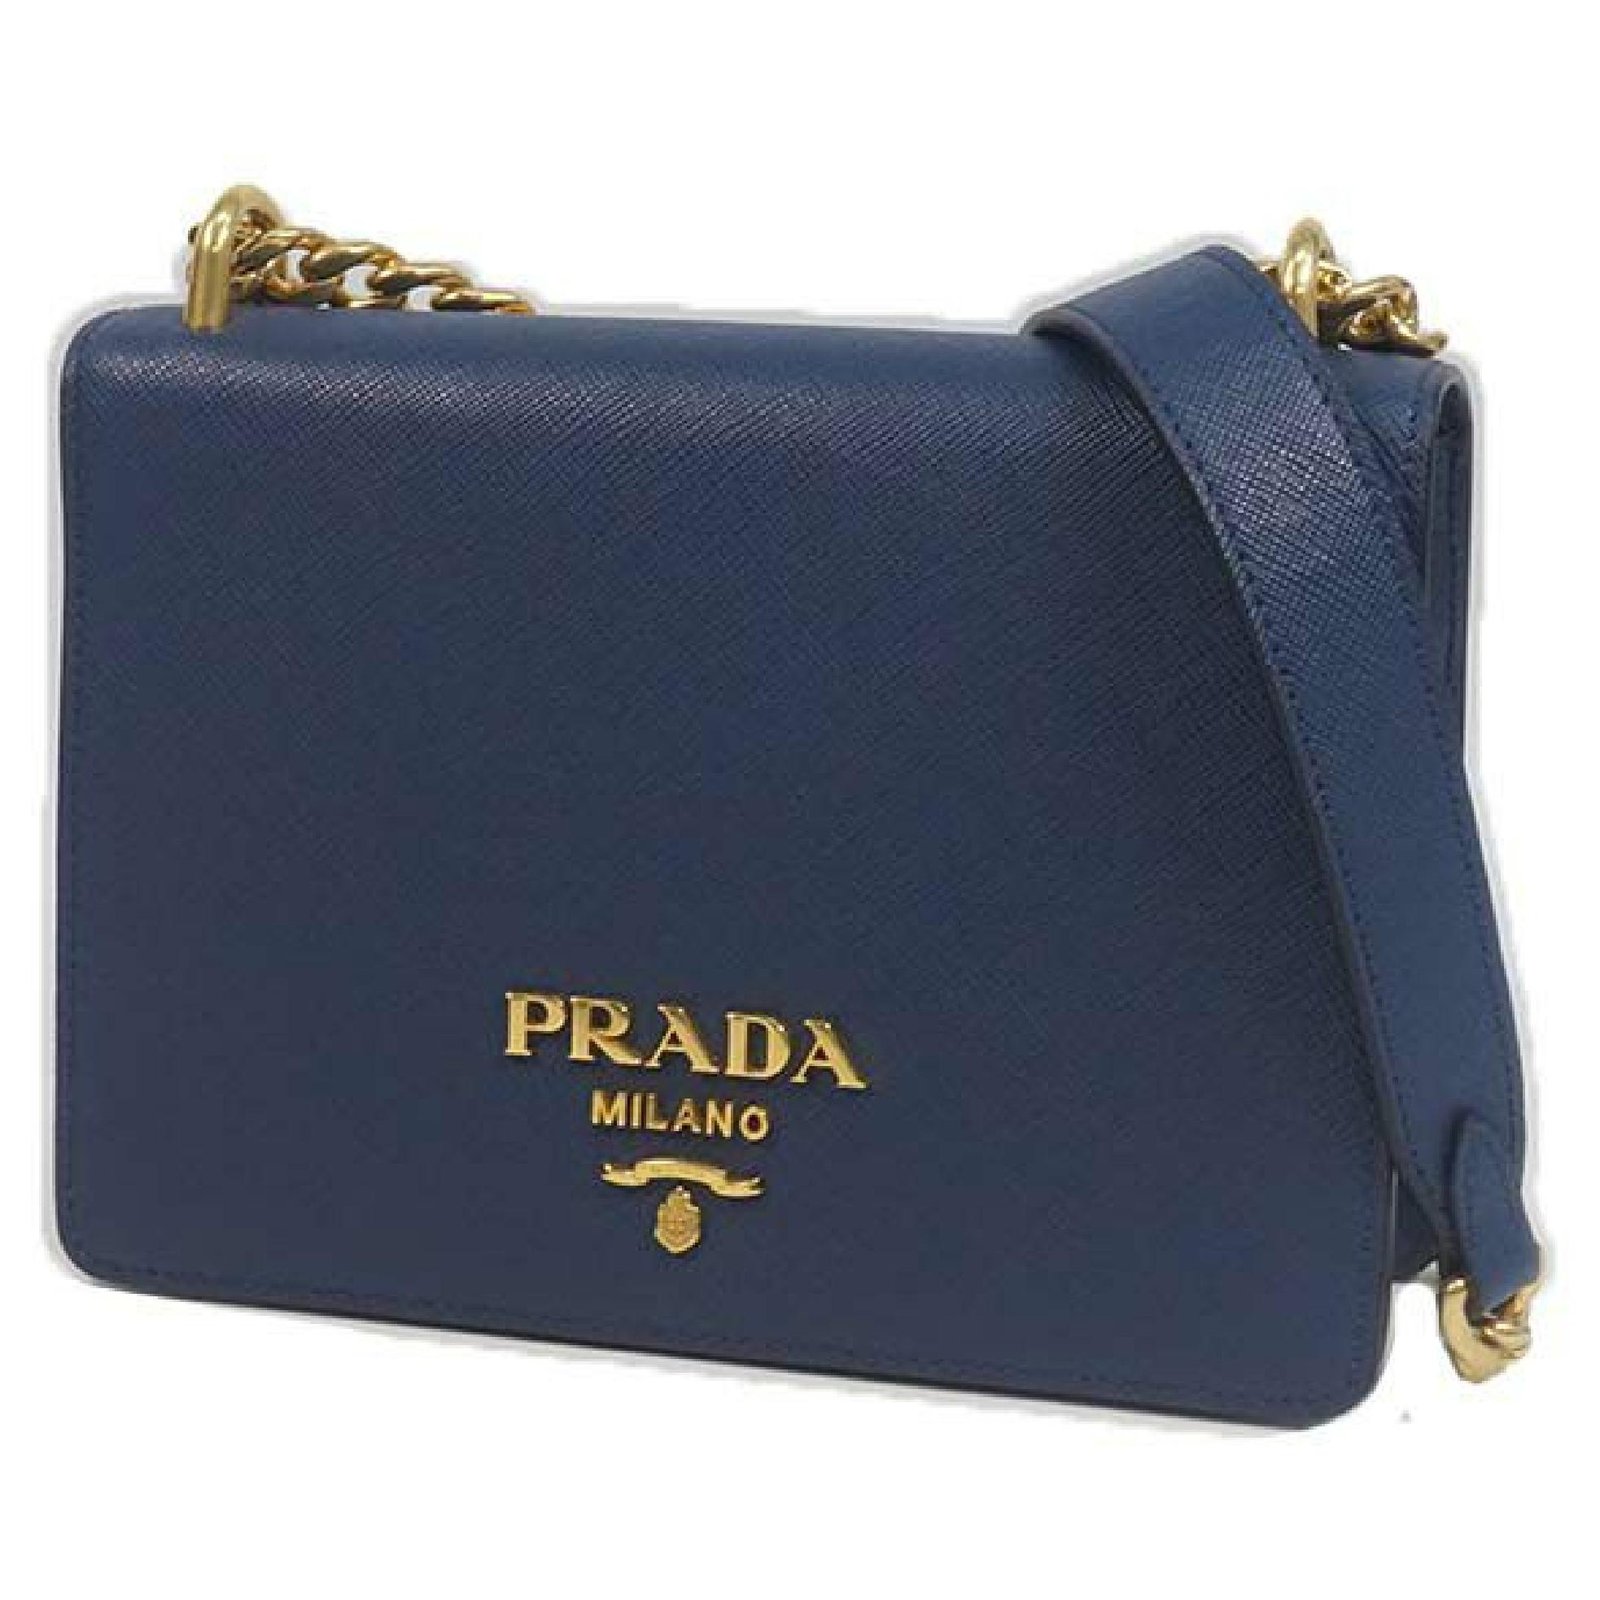 prada bag with gold hardware